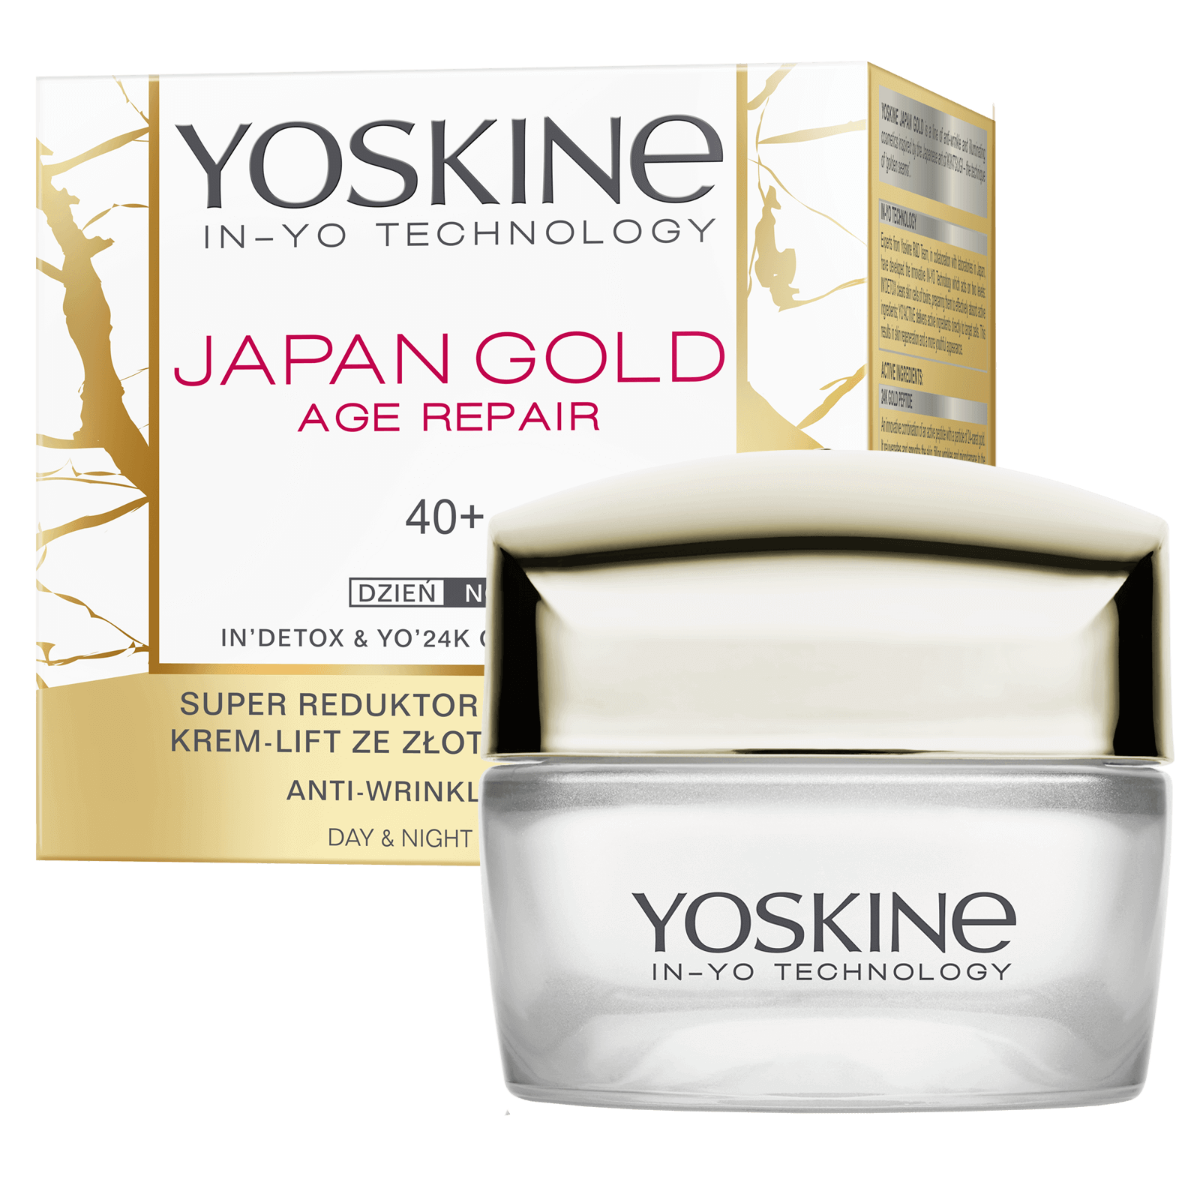 Crema antirid si fermitate de zi si noapte pentru ten 40+ Japan Gold Age Repair, 50ml, Yoskine